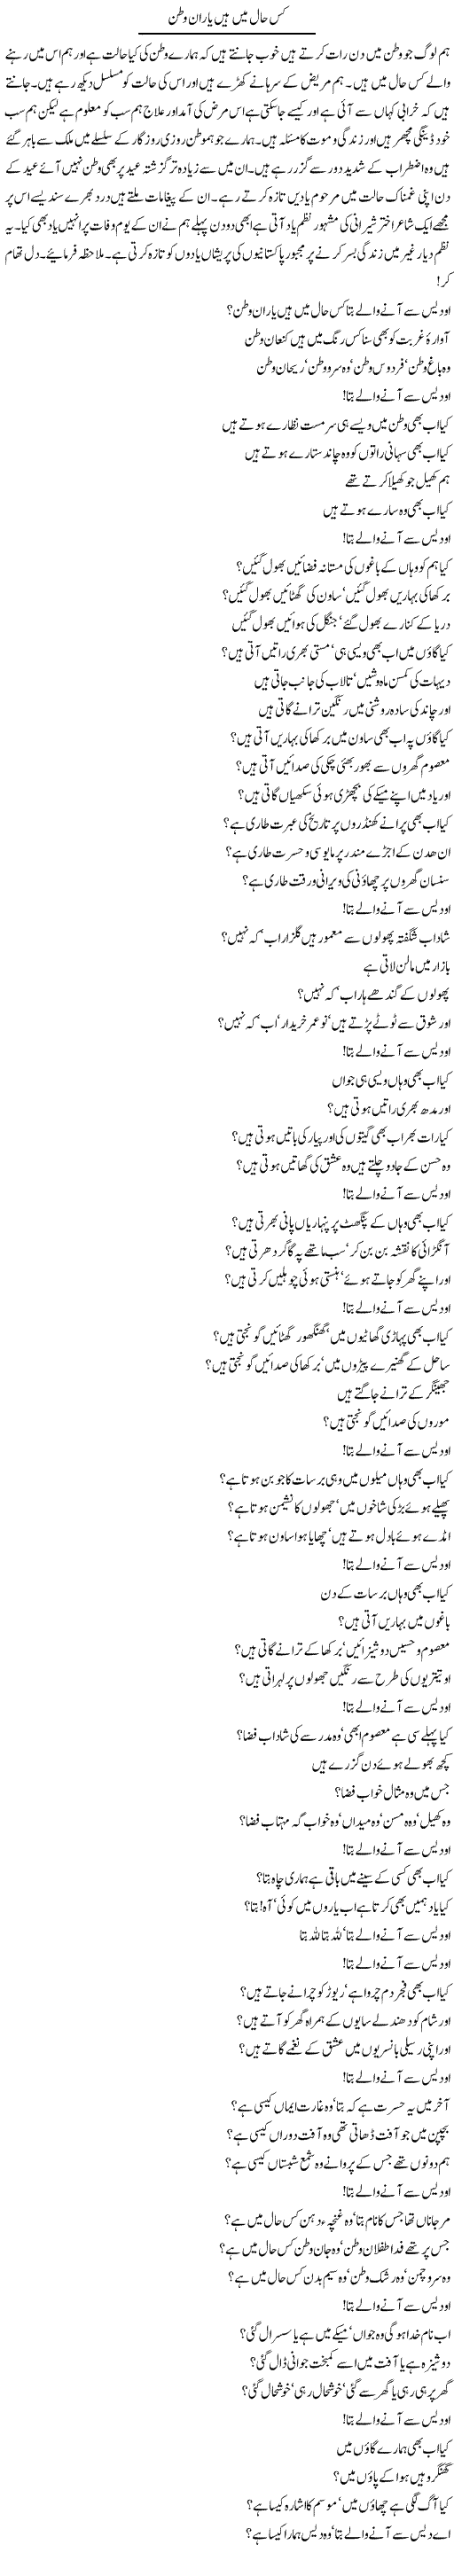 Poem For People of Pakistan Express Column Abdul Qadir 11 September 2011